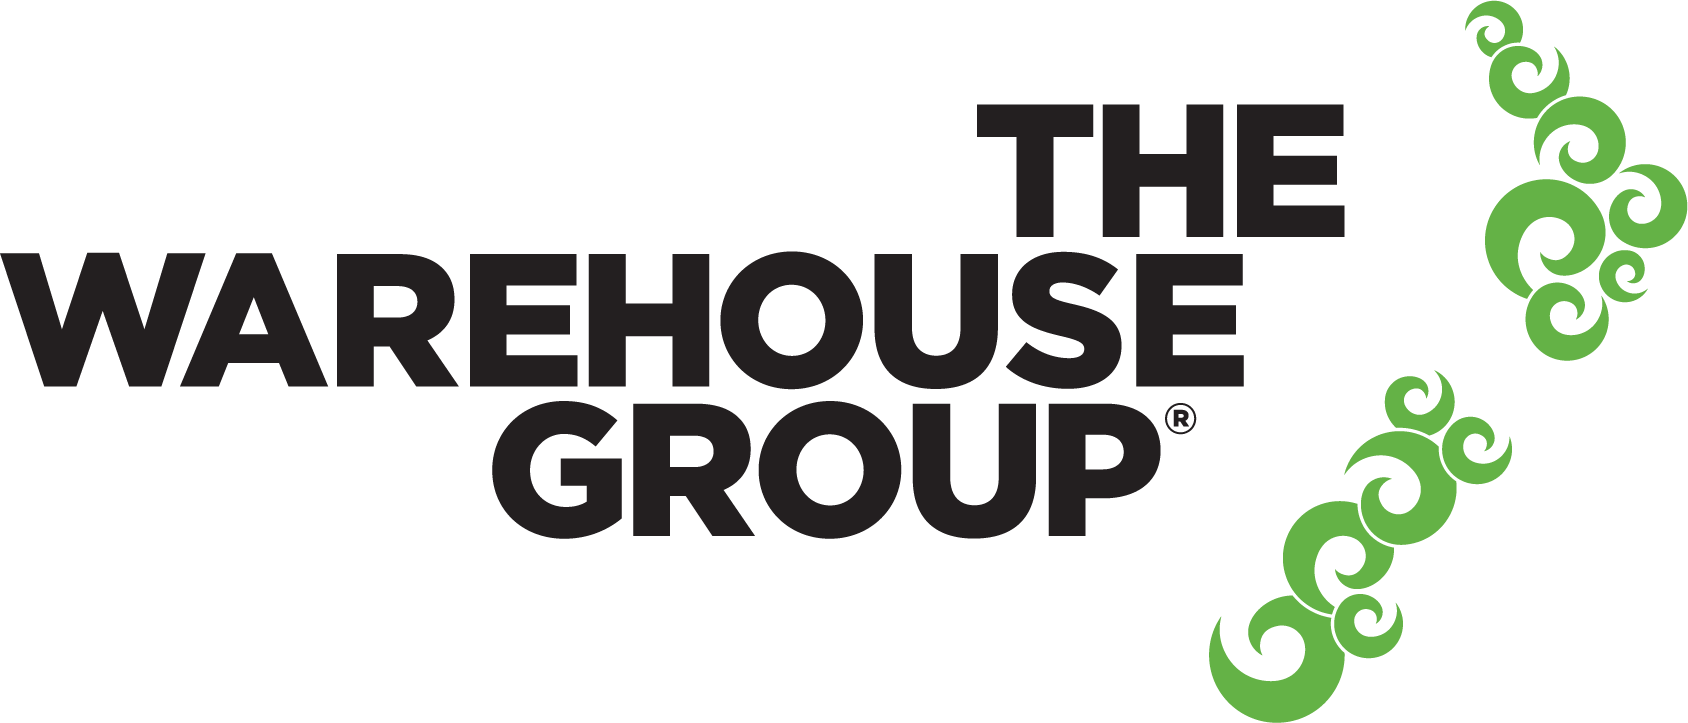 3X Logo - The Warehouse Group - Logos